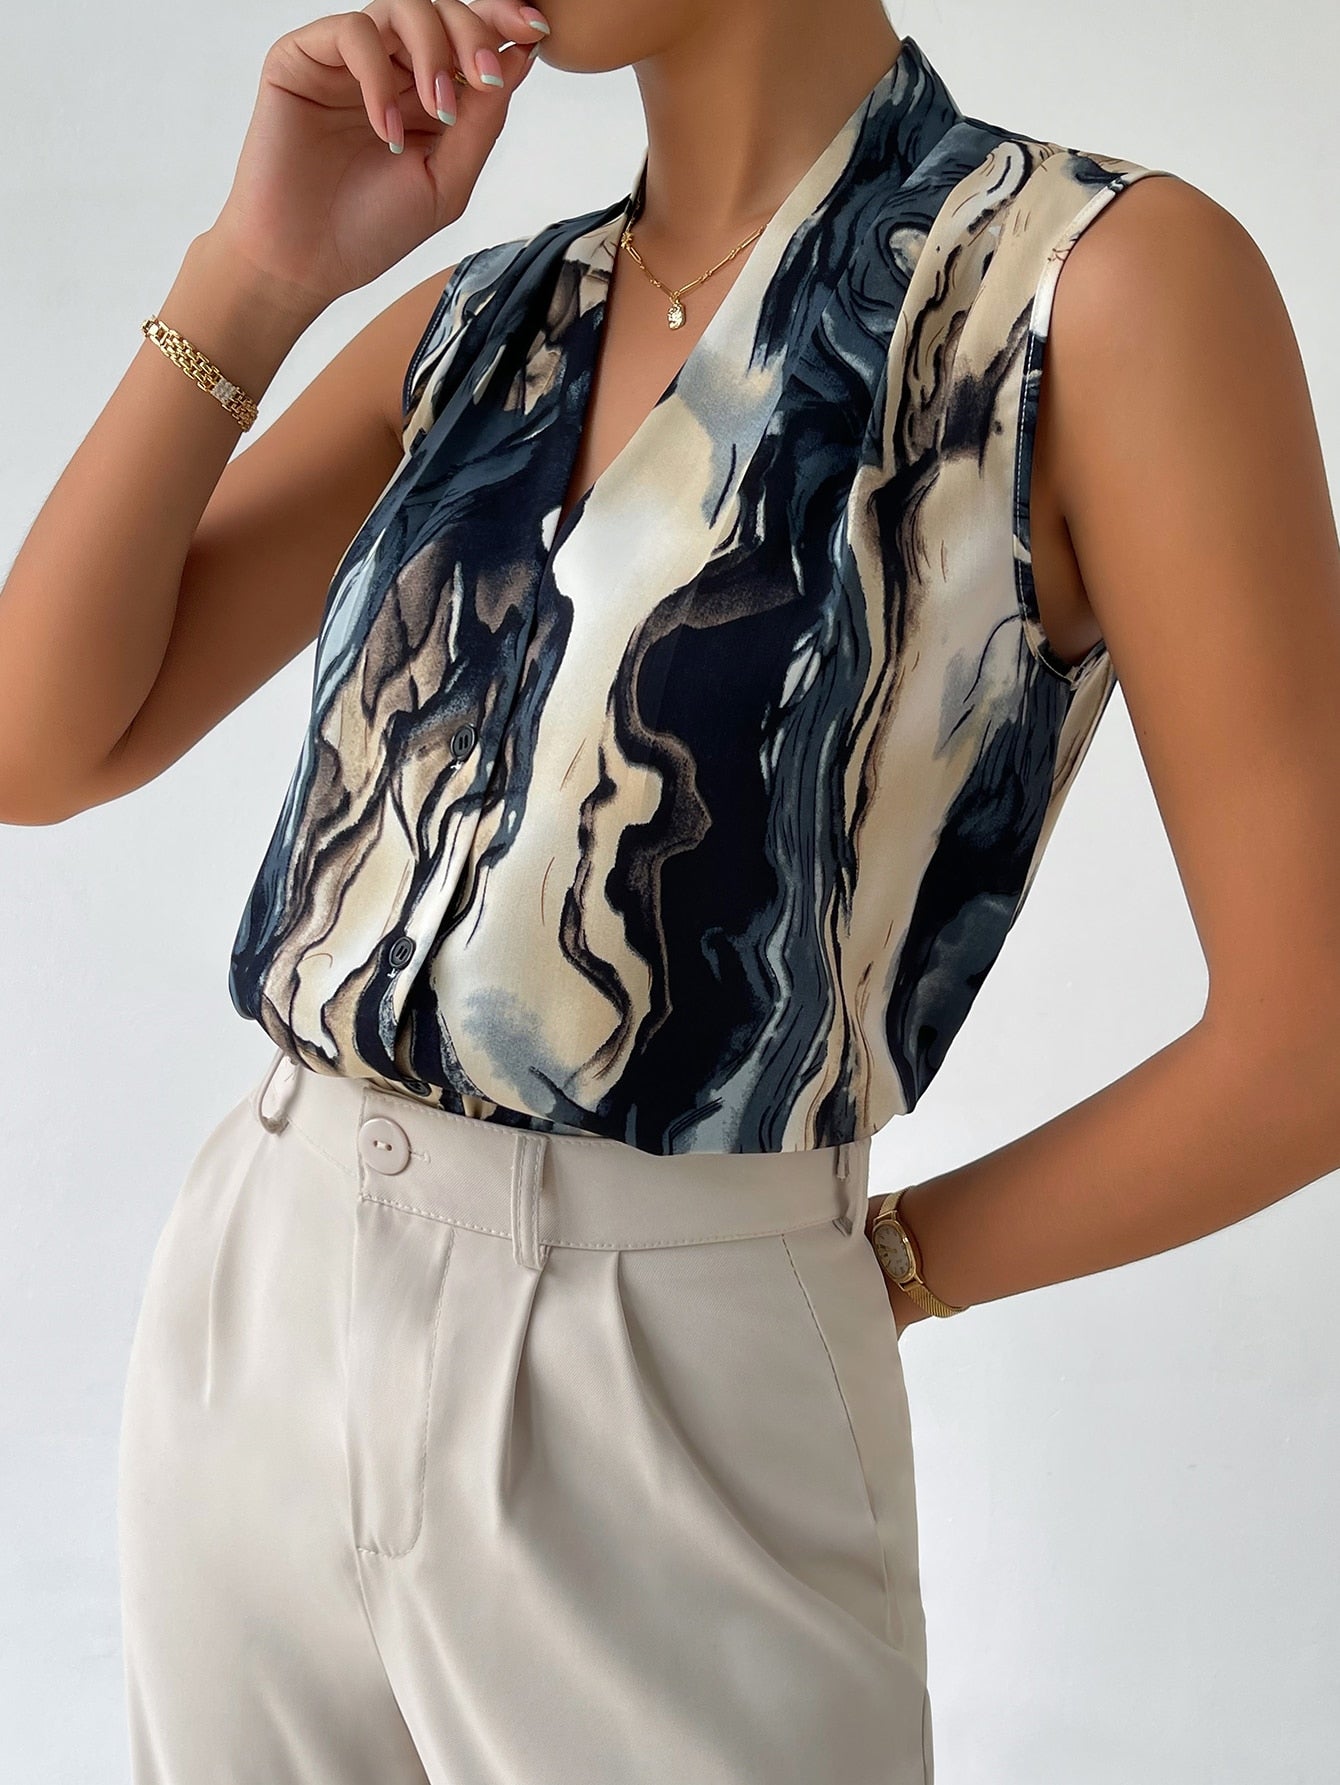 Lopecy-Sta Fashion Woman V-Neck Sleeveless Blouse T-Shirt Printing